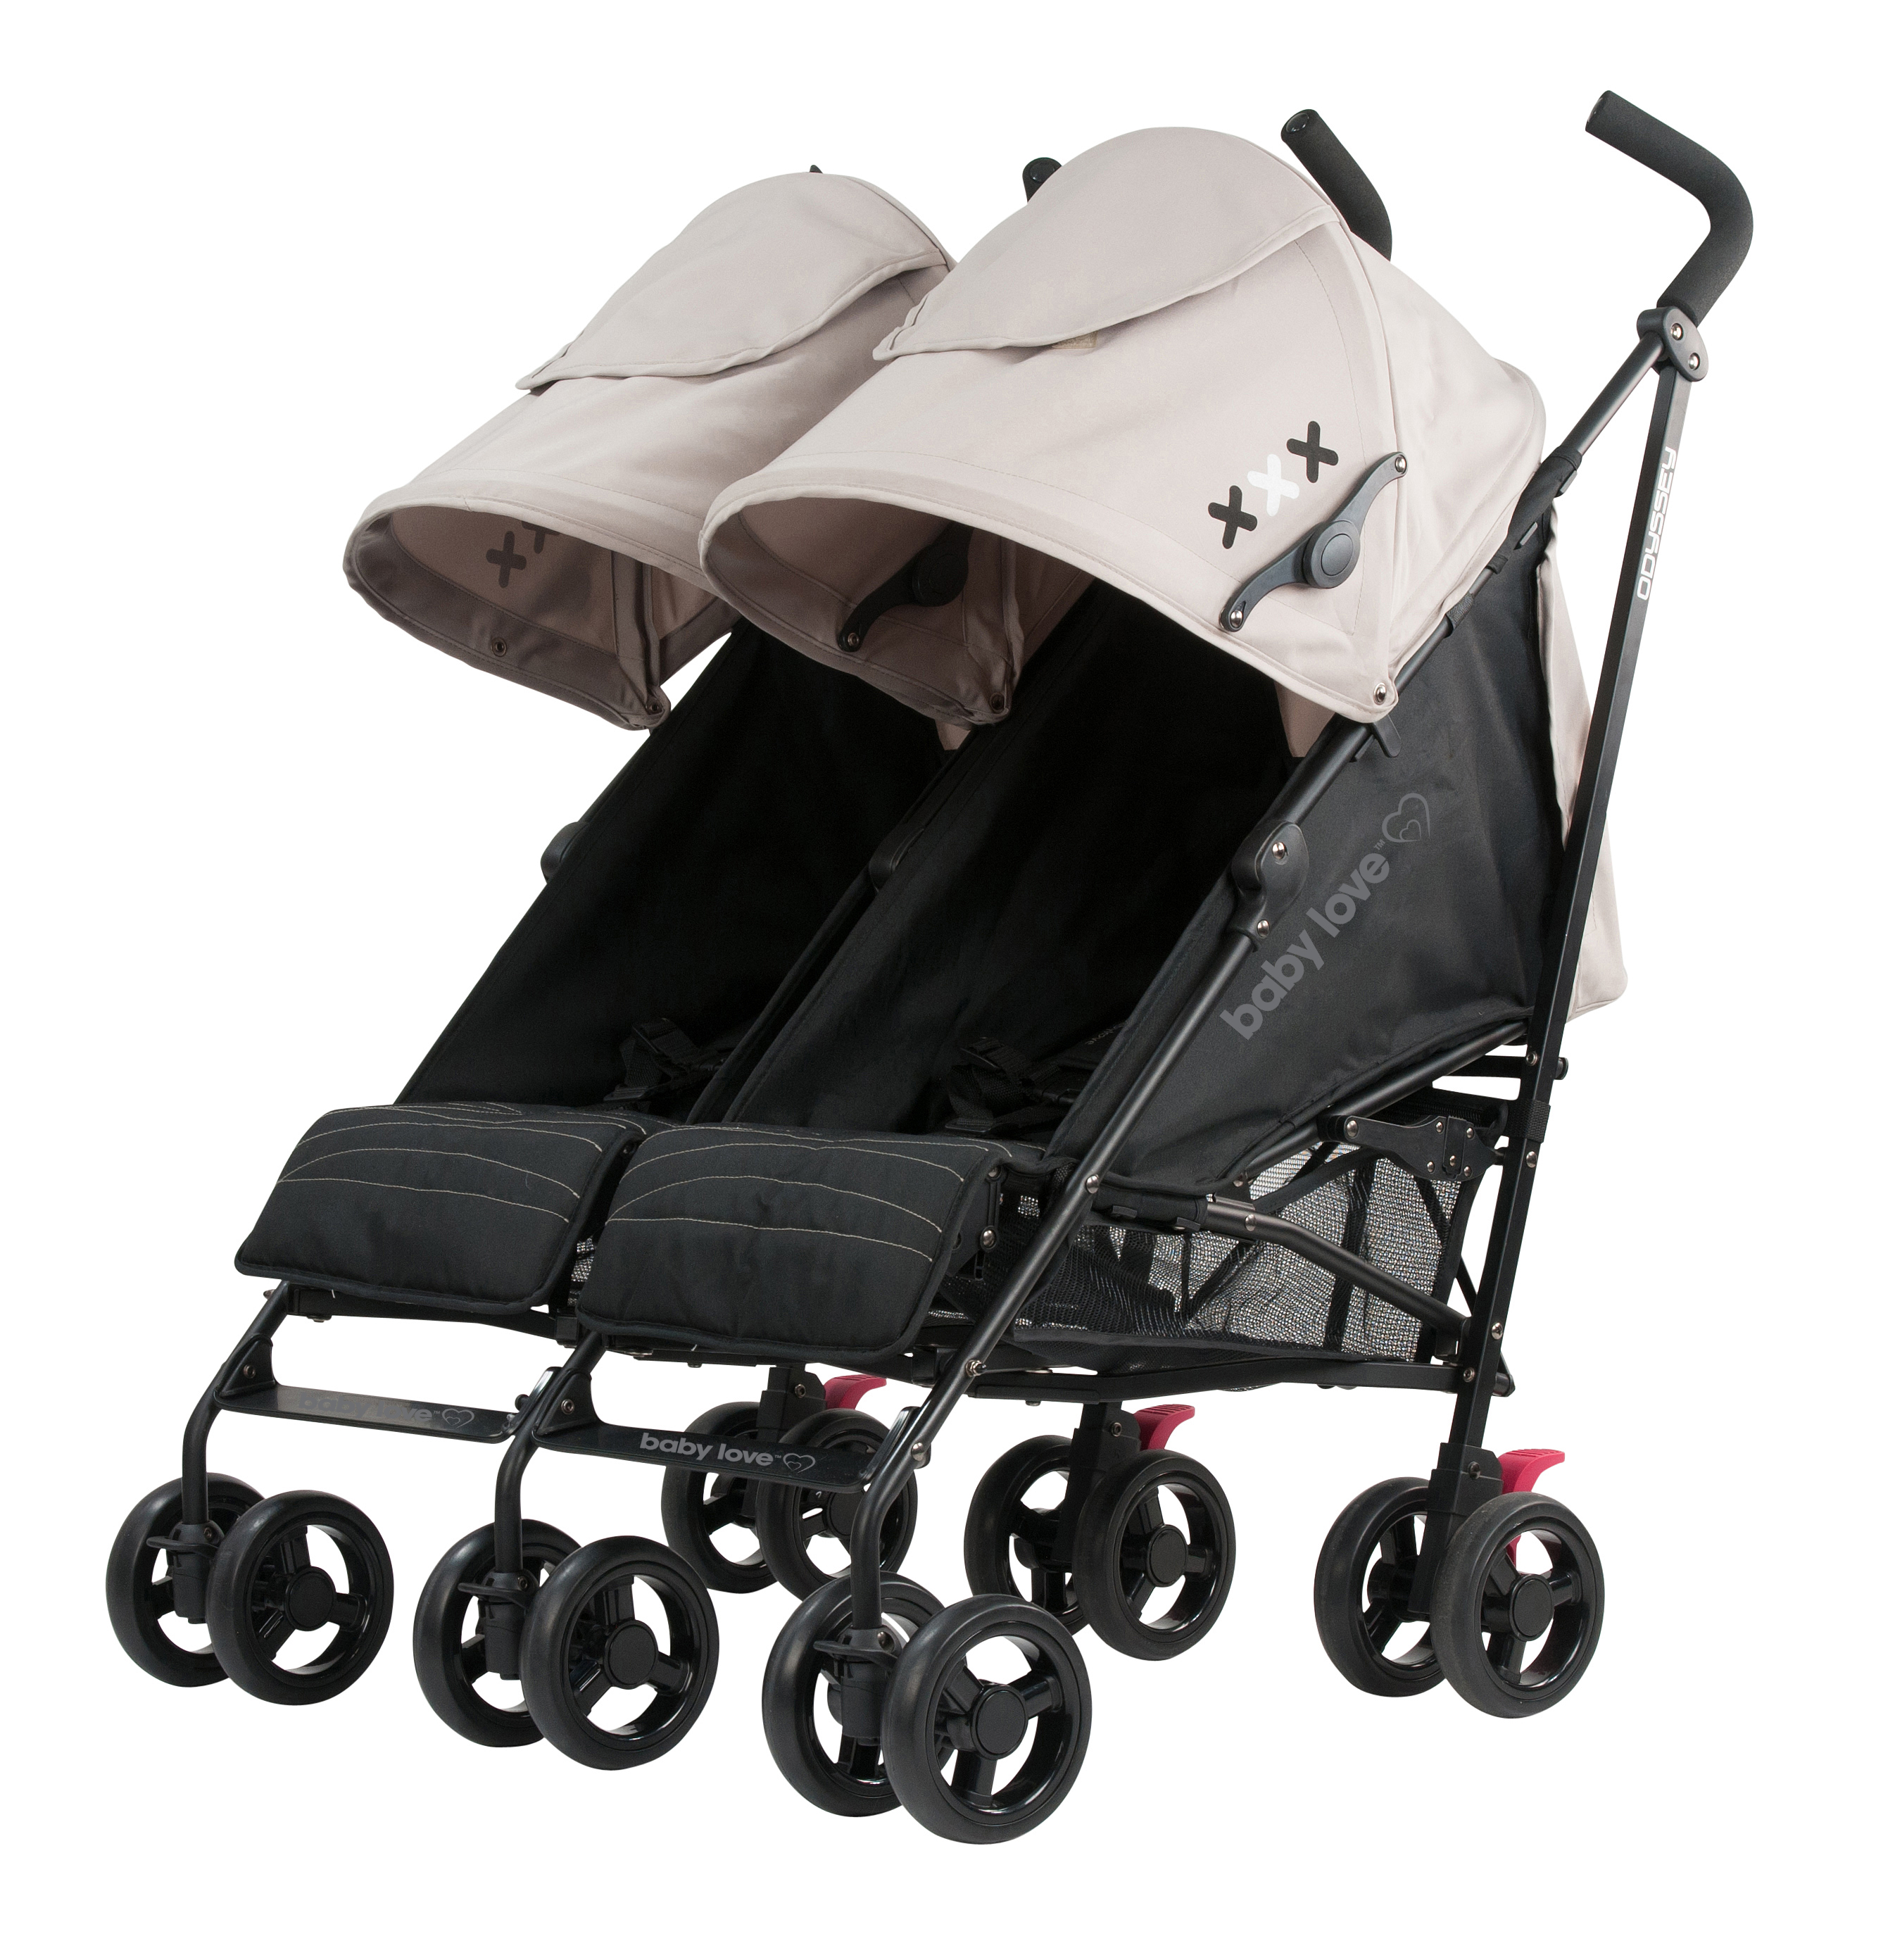 baby love double stroller